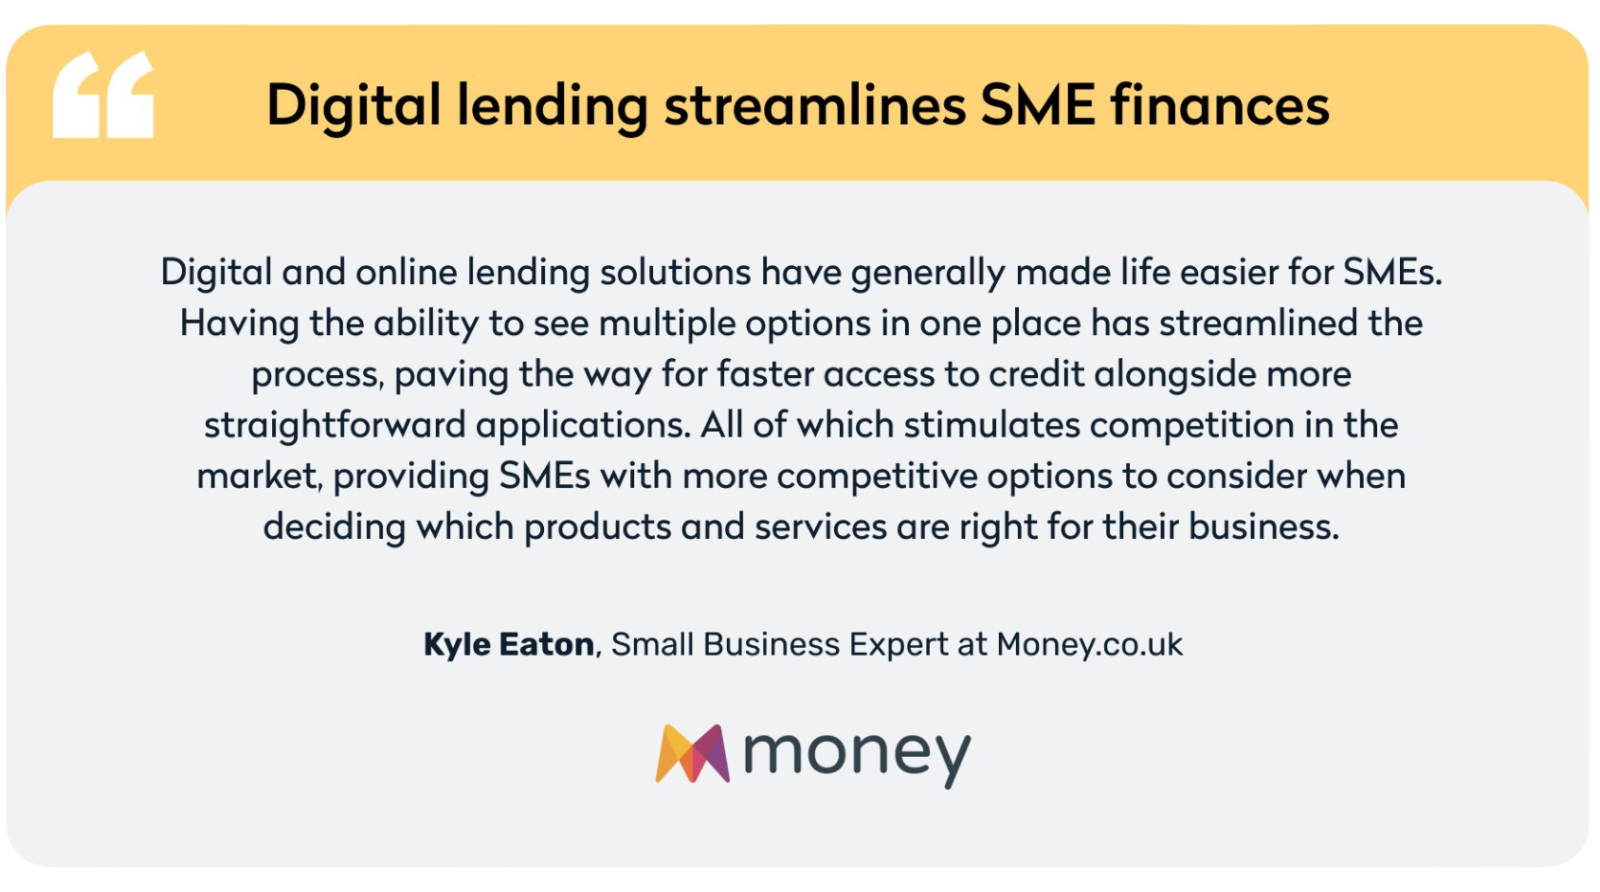 digital lending streamlines SME finances